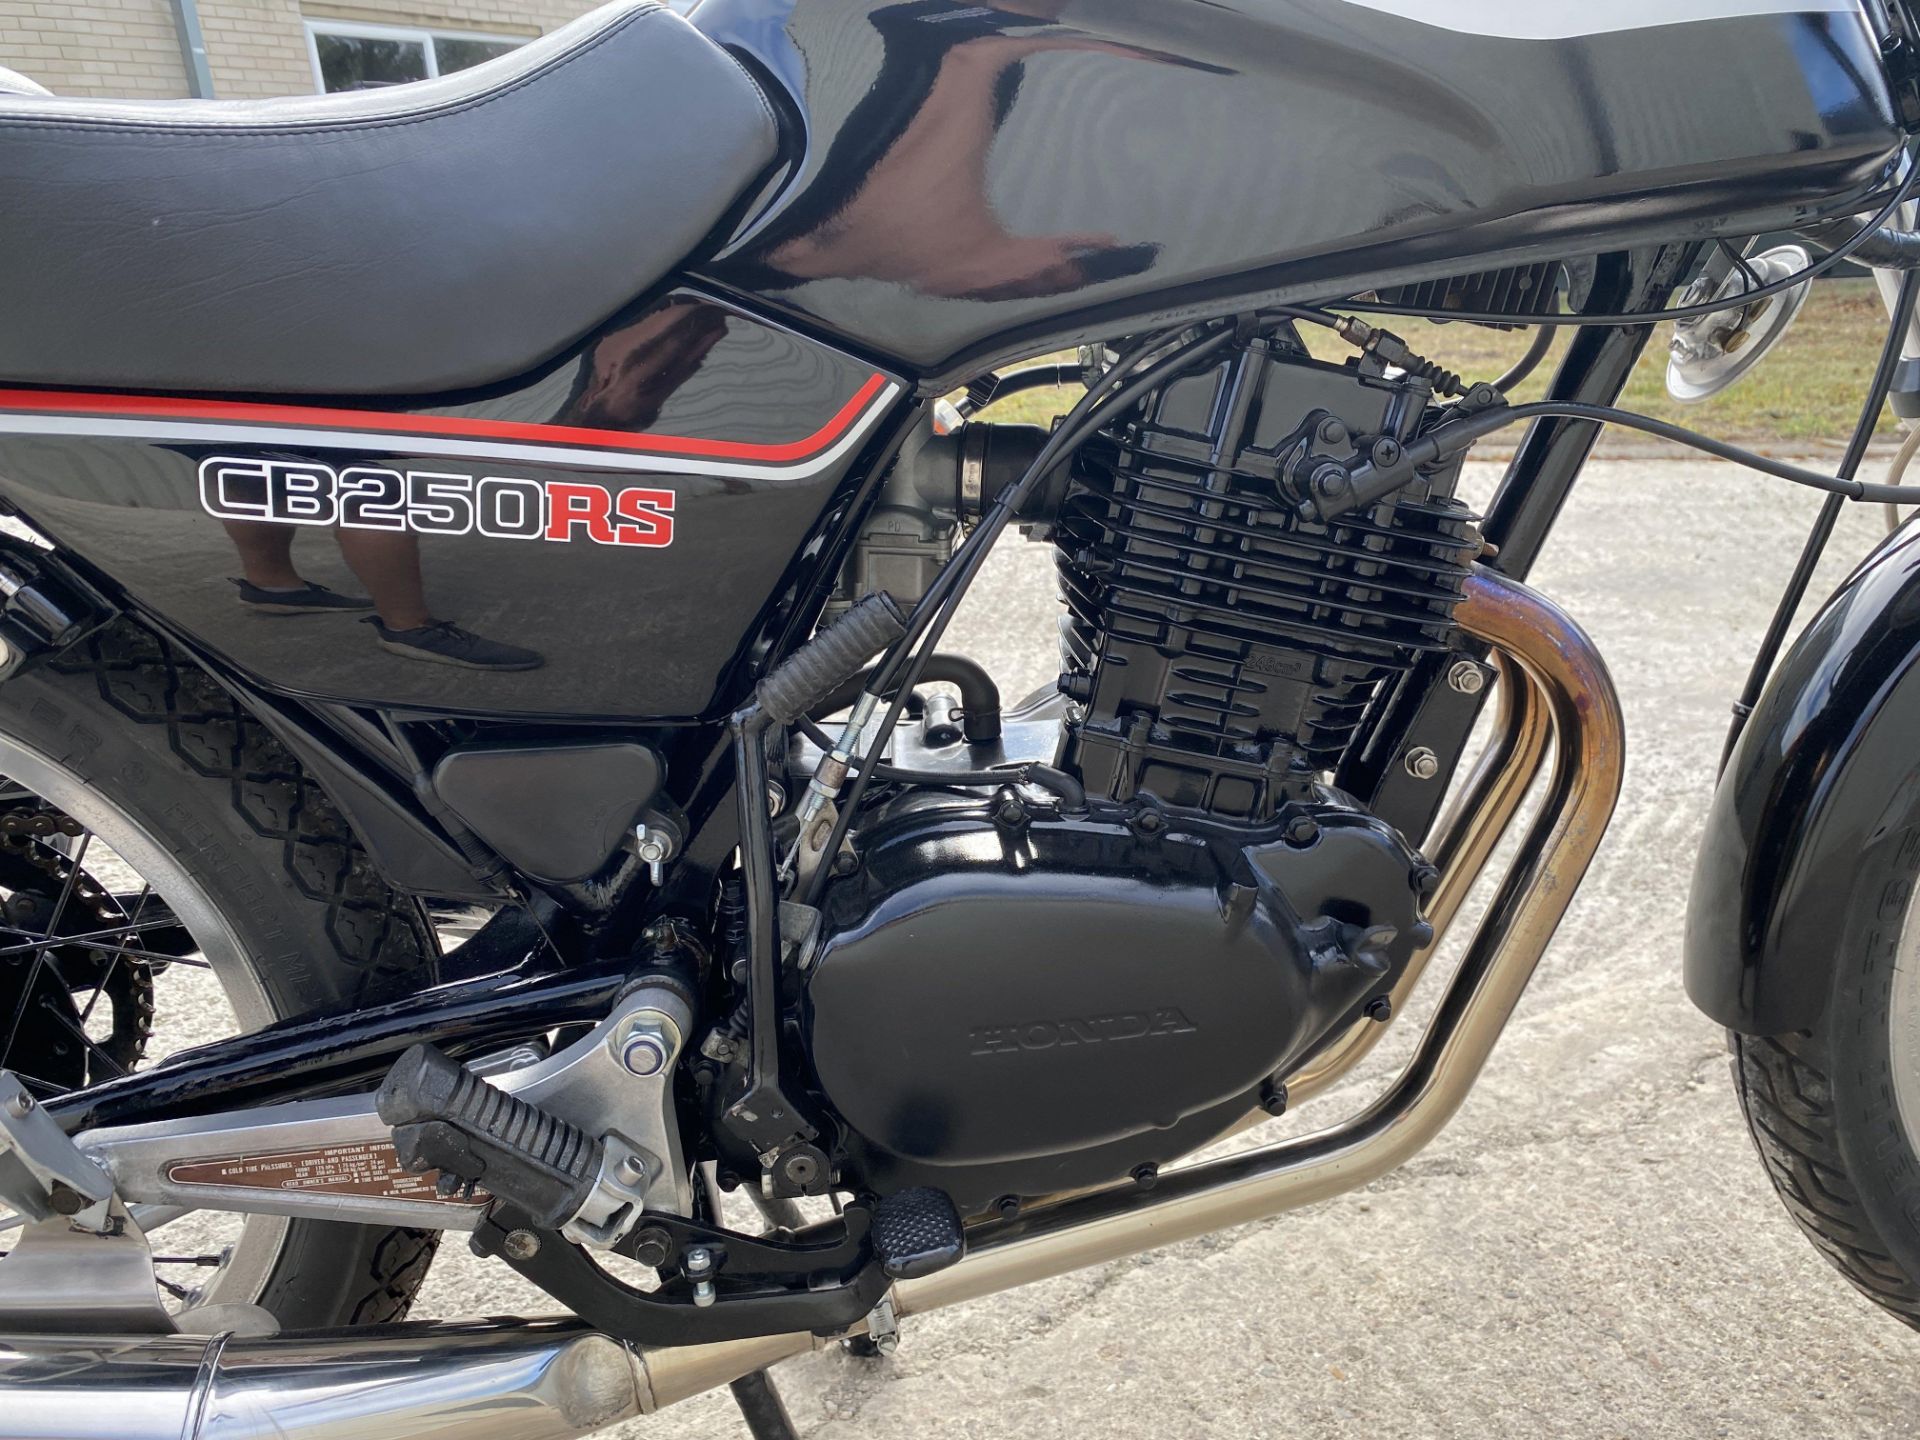 Honda CB250RS - Image 17 of 26